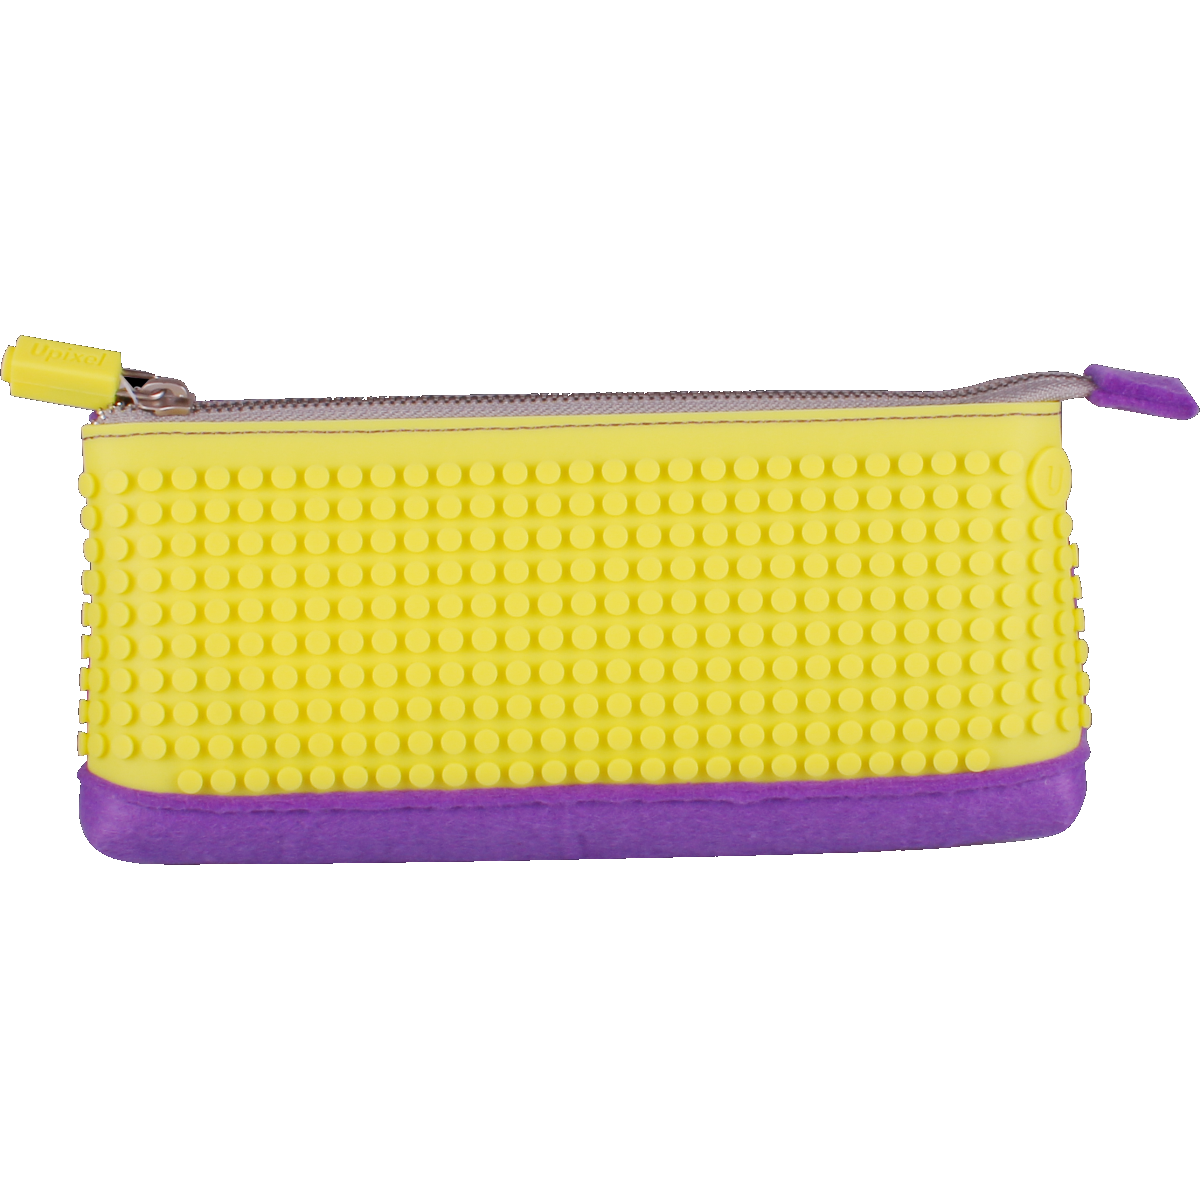 UPixel Pencil Case - Yellow/Purple